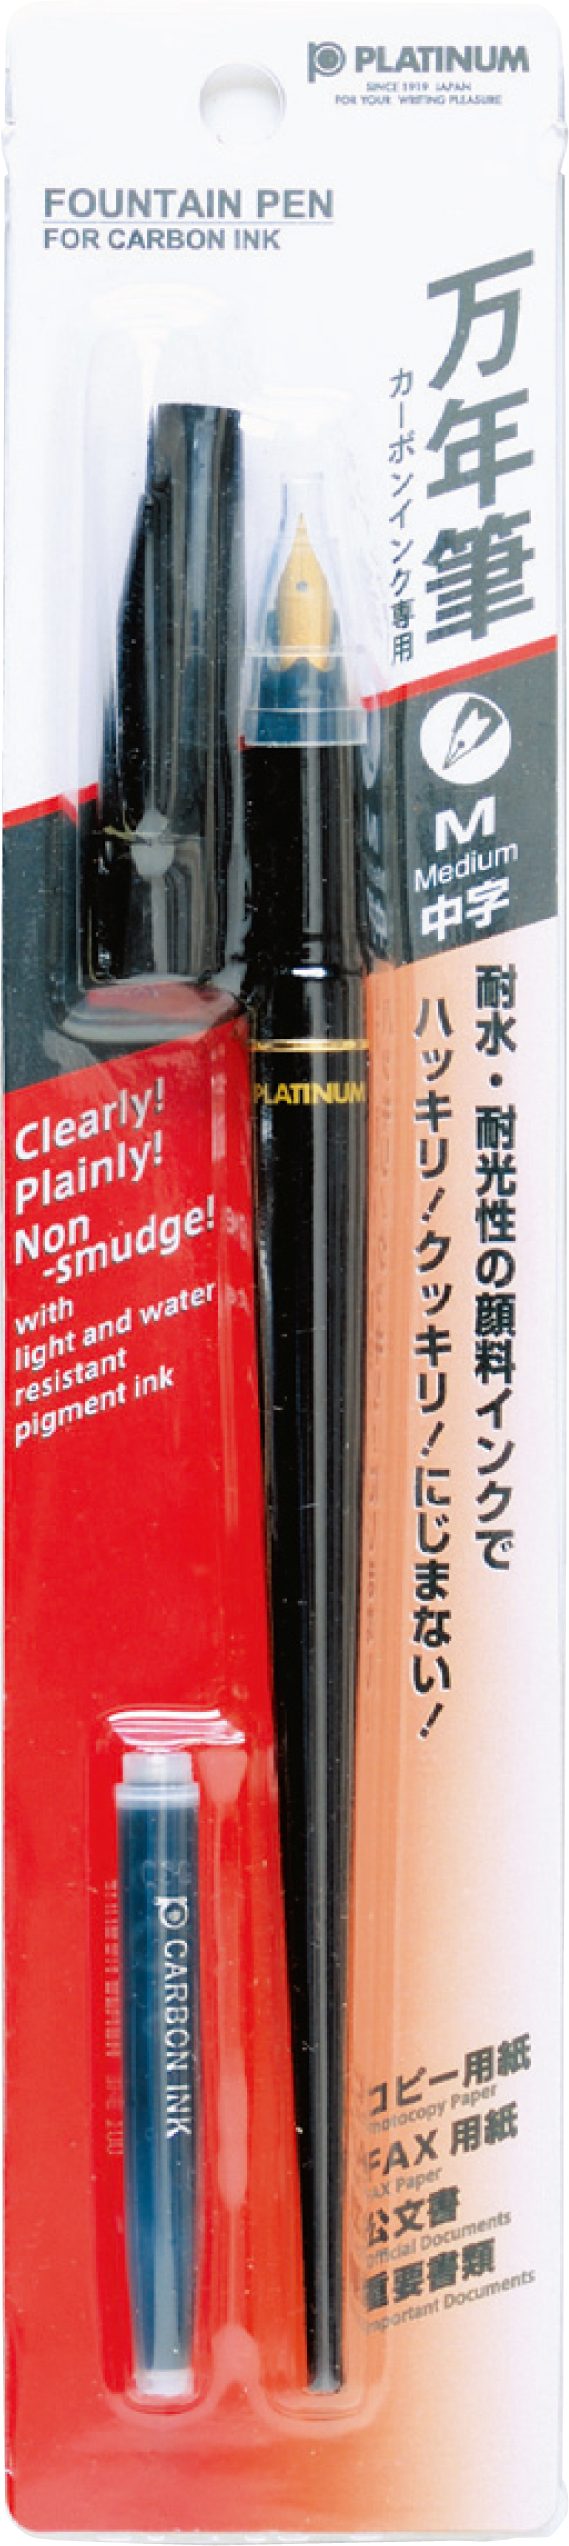 Carbon pen designated fountain pen